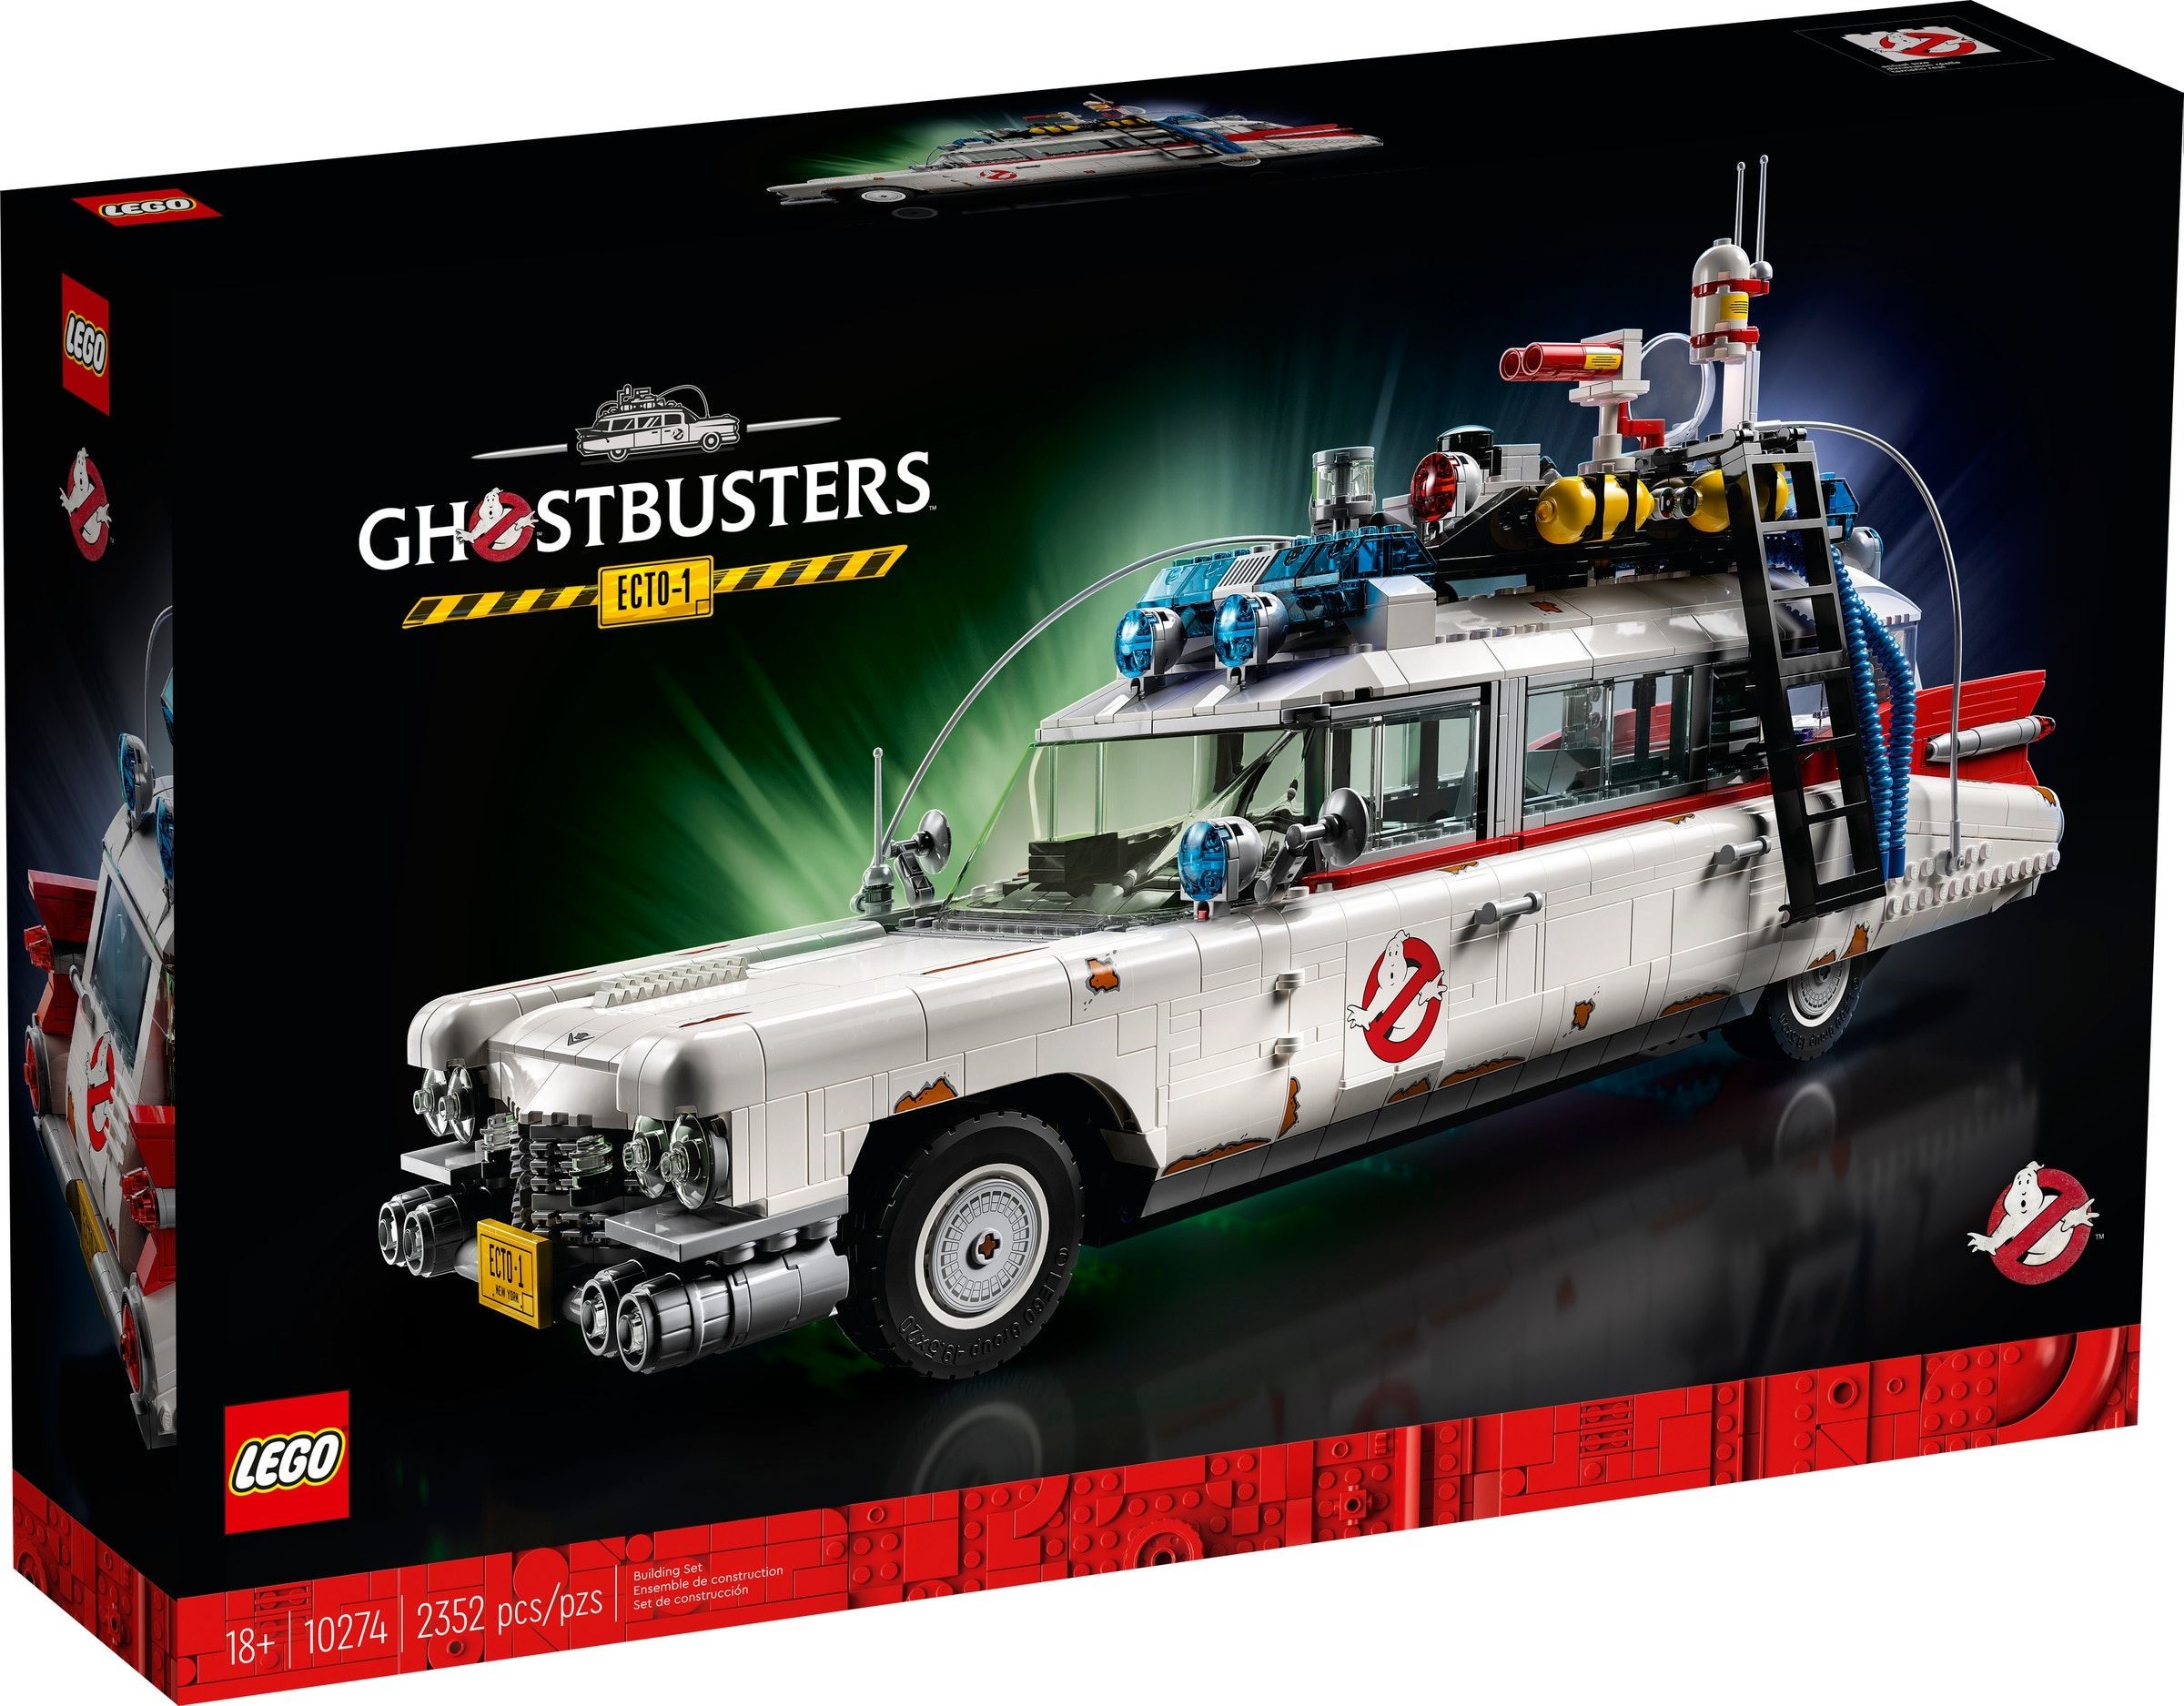 10274 Ghostbusters ECTO-1, Brickipedia